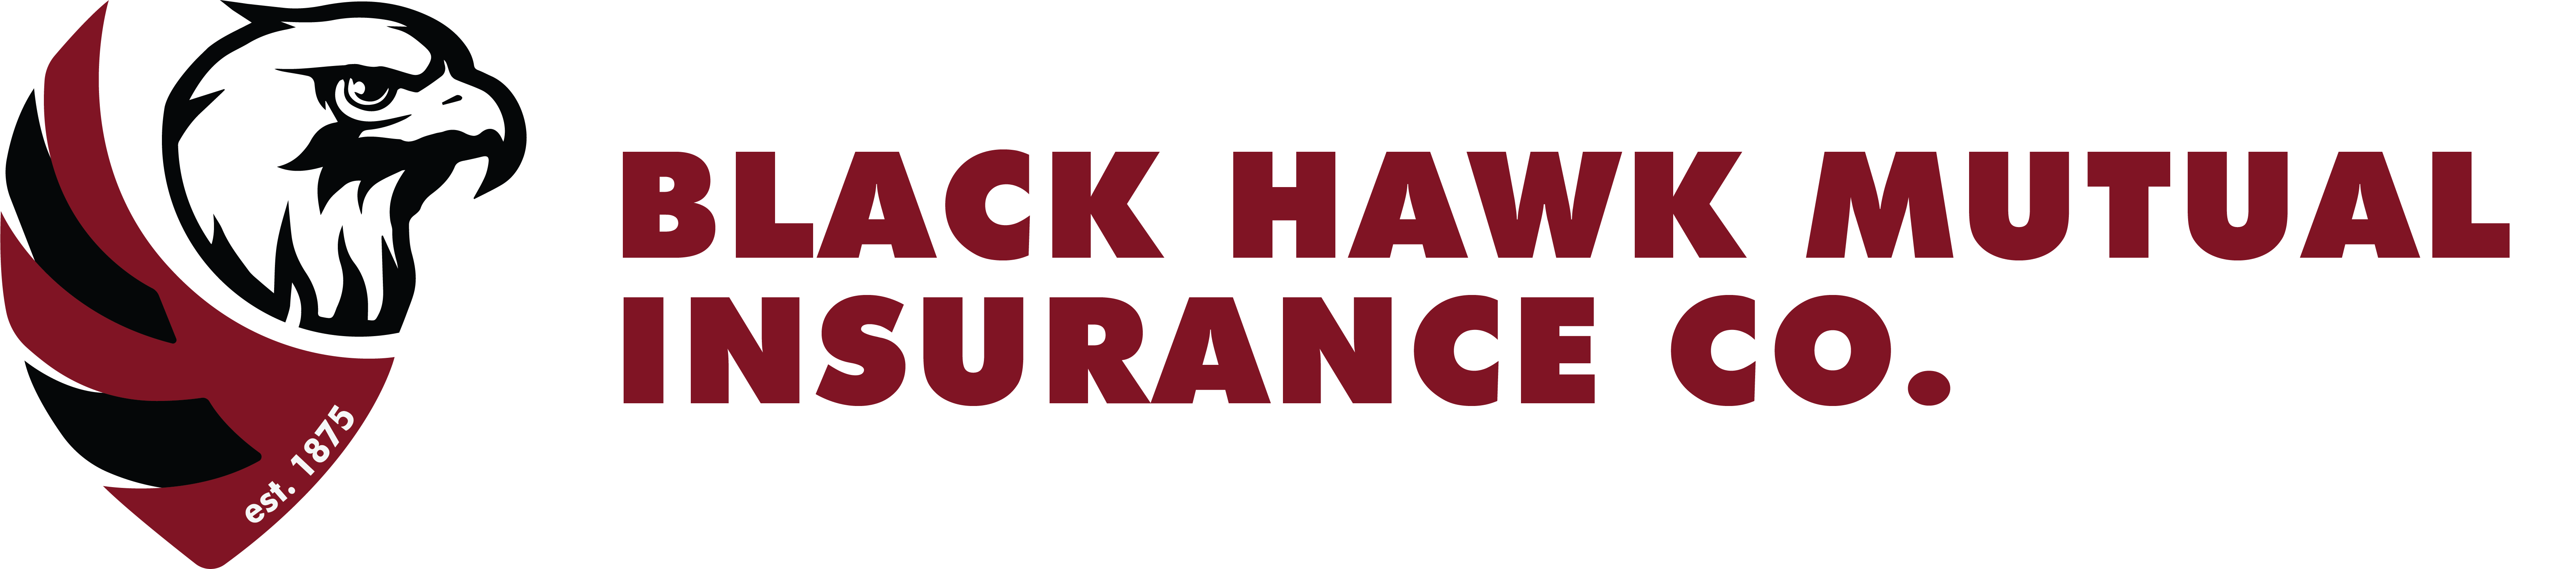 Black Hawk Mutual Insurance Company